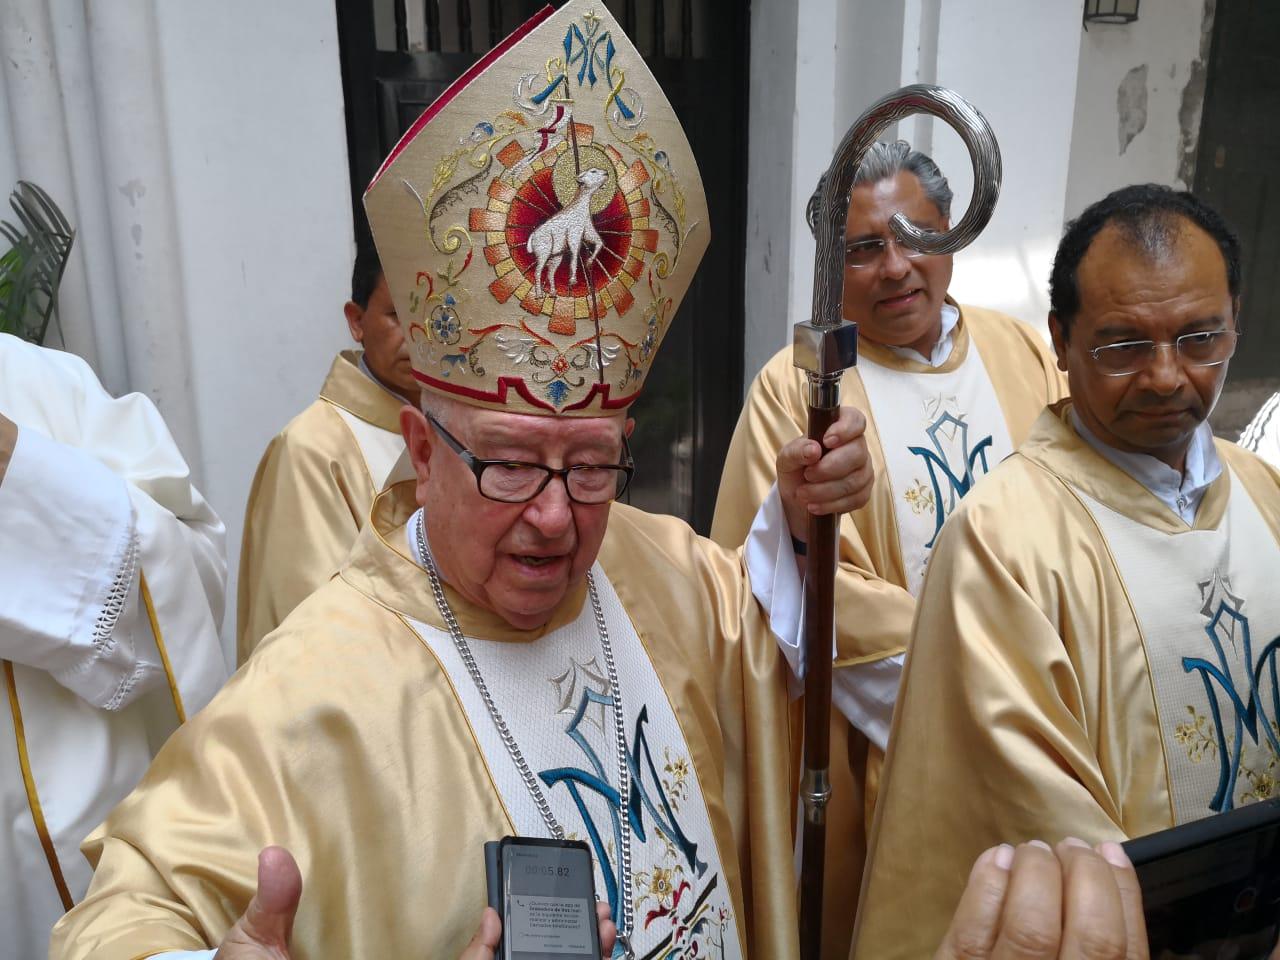 Cardenal Obeso señala a víctimas de pederastia, tienen "cola que les pisen"